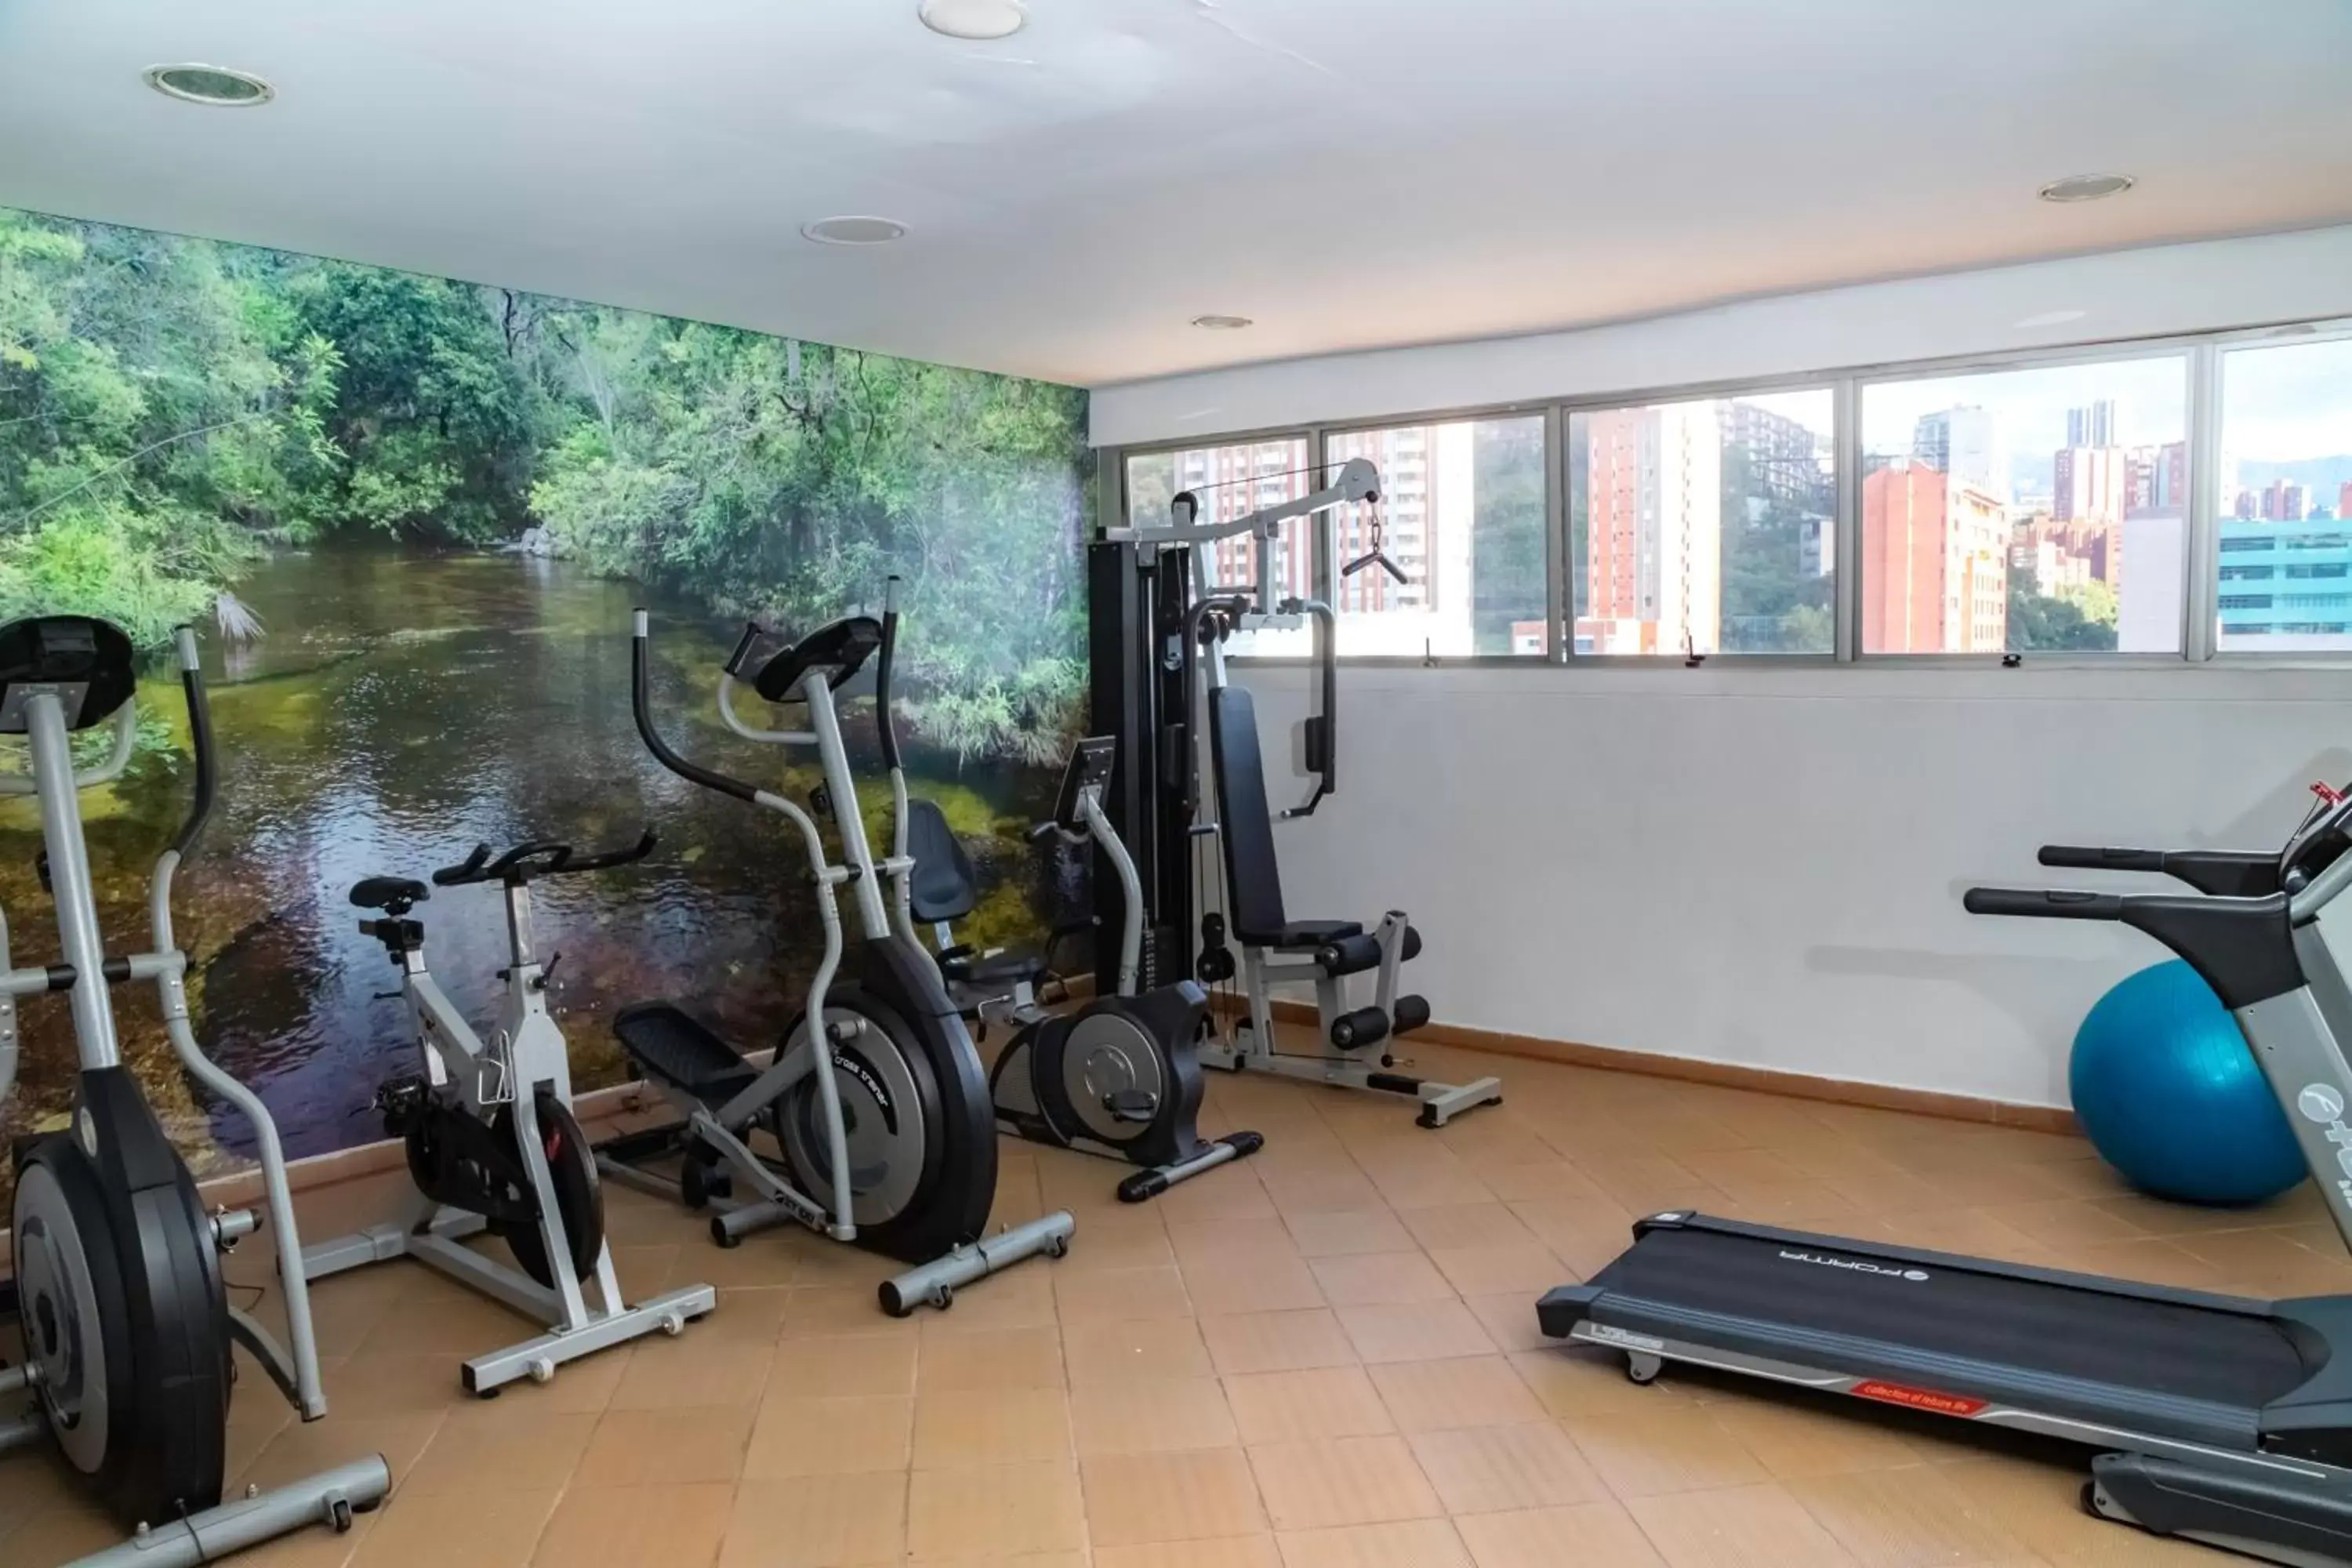 Fitness centre/facilities, Fitness Center/Facilities in Mi Hotel Sandiego